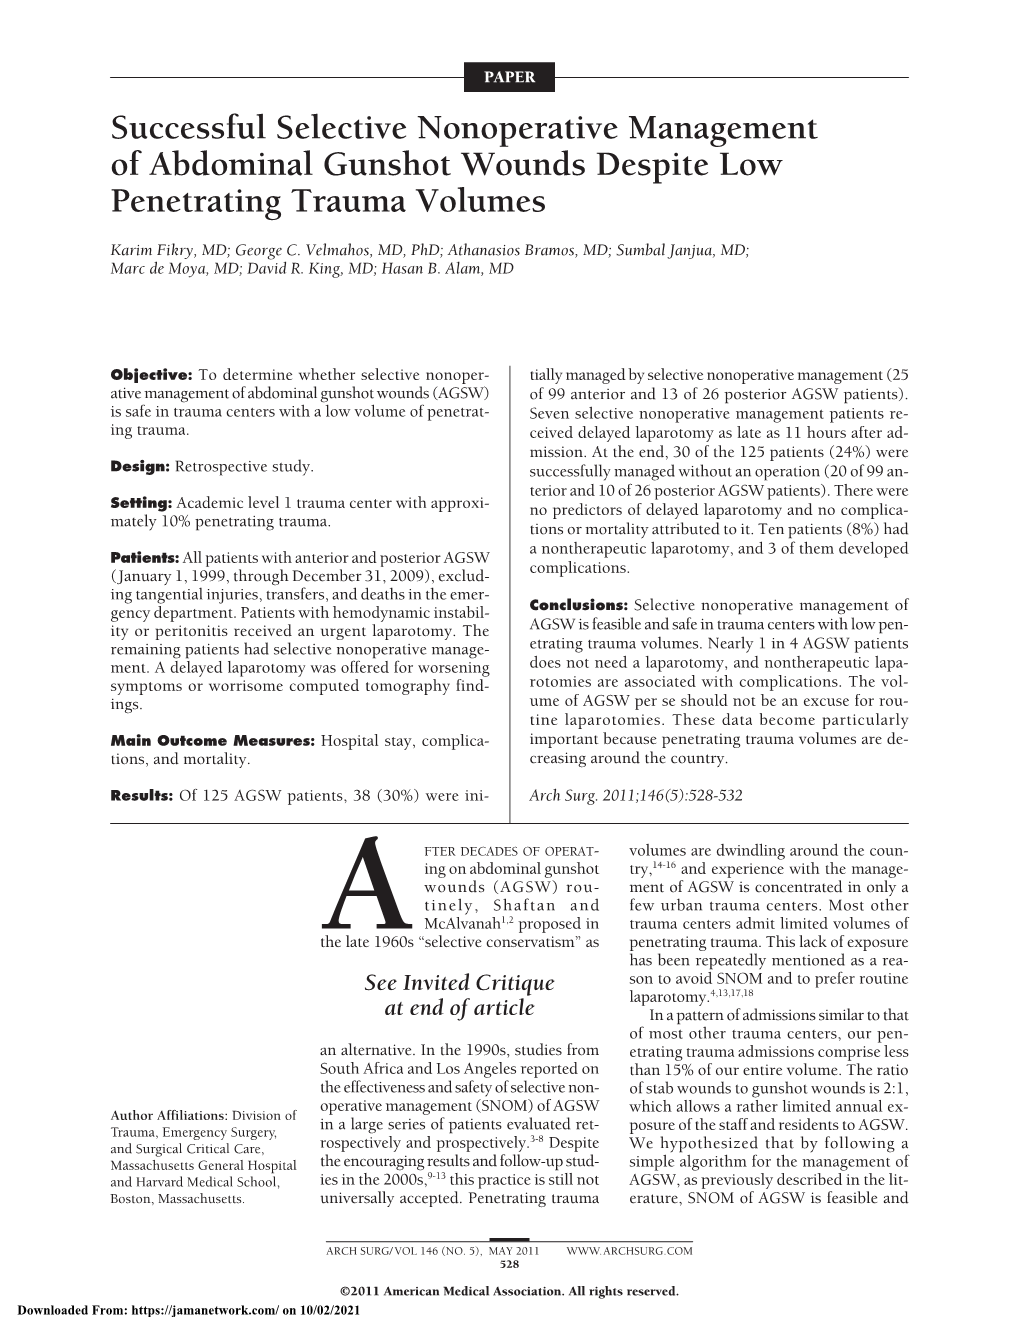 Successful Selective Nonoperative Management of Abdominal Gunshot Wounds Despite Low Penetrating Trauma Volumes